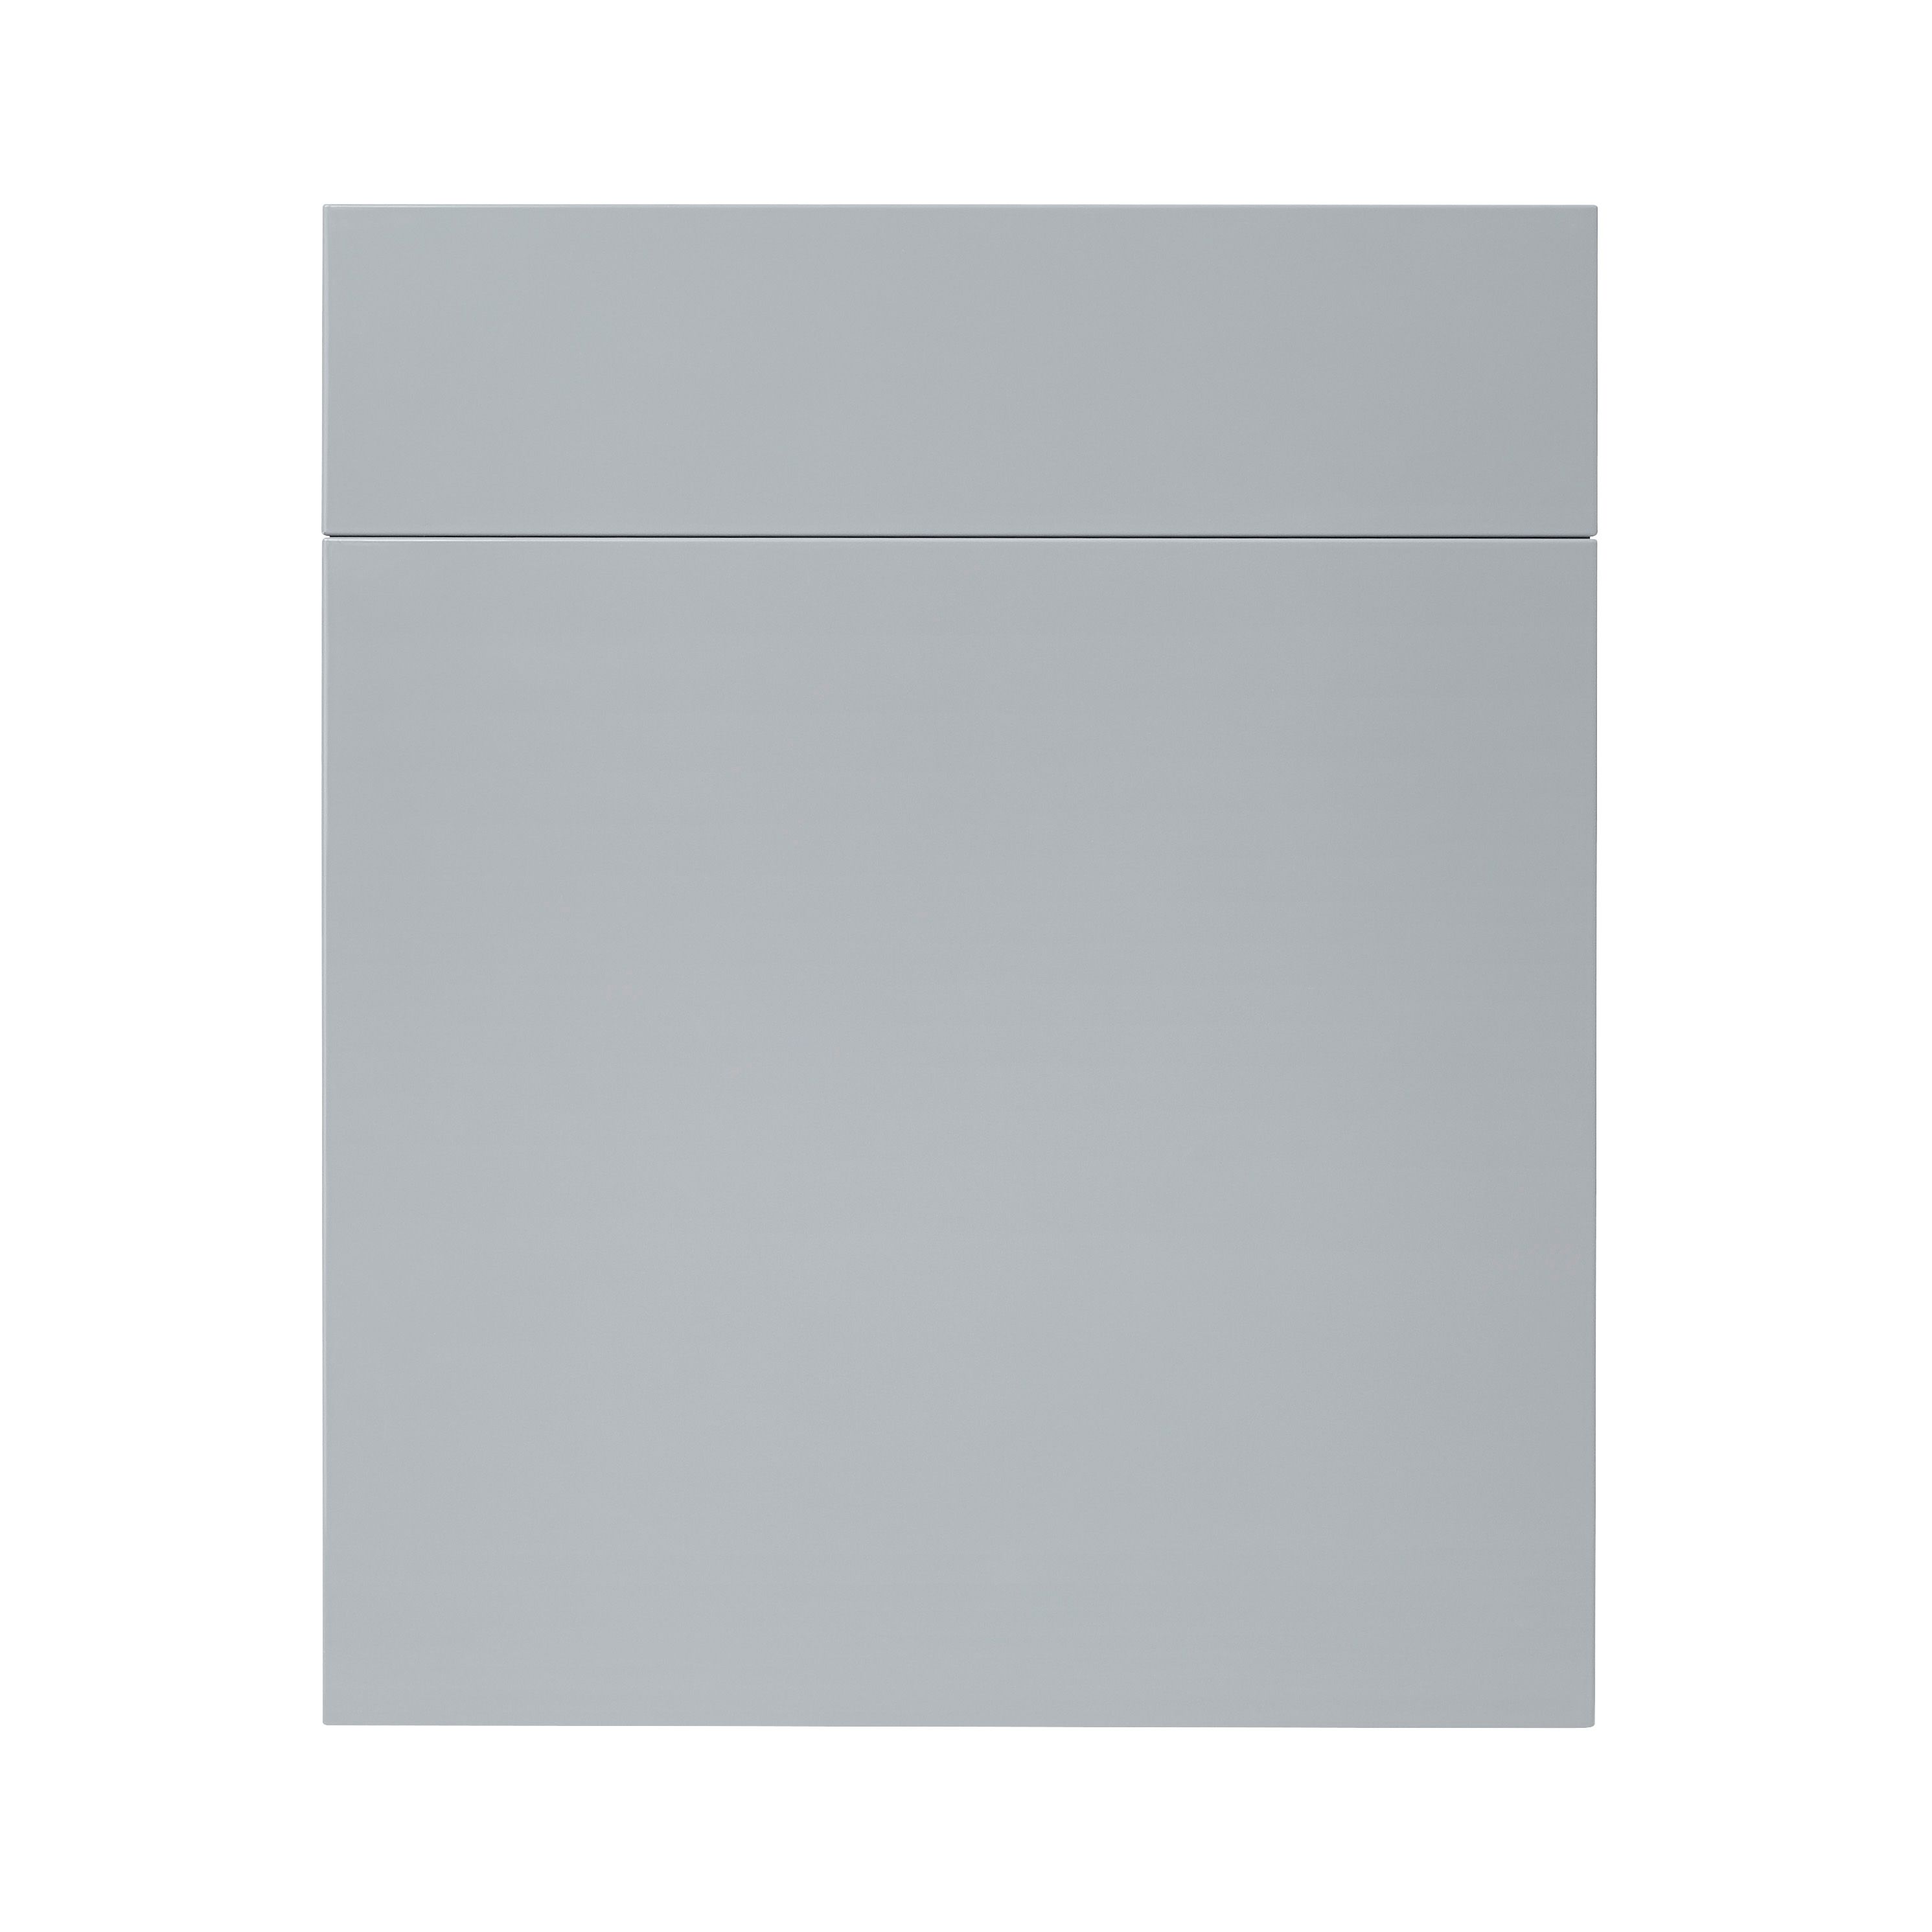 GoodHome Alisma High gloss grey slab Drawerline Cabinet door, (W)600mm (H)715mm (T)18mm